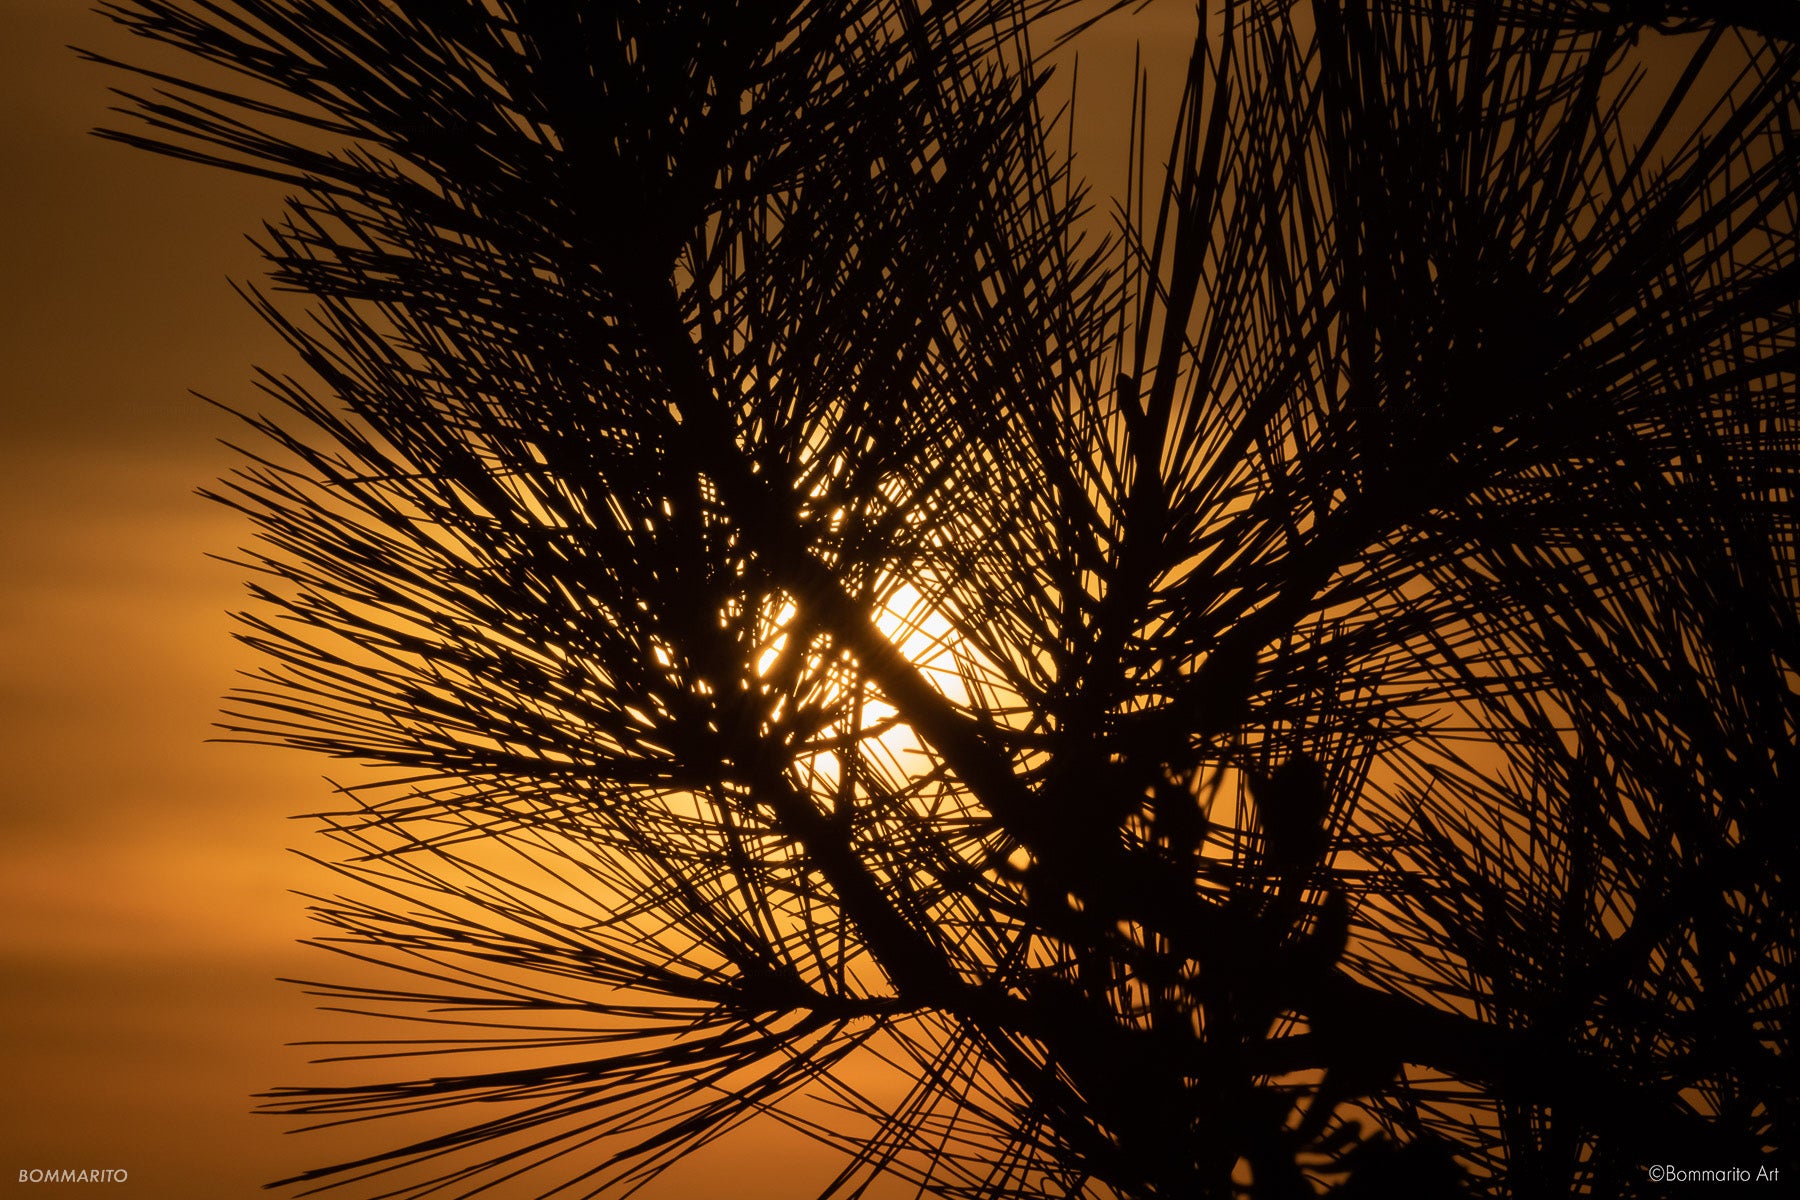 Sunset Pines